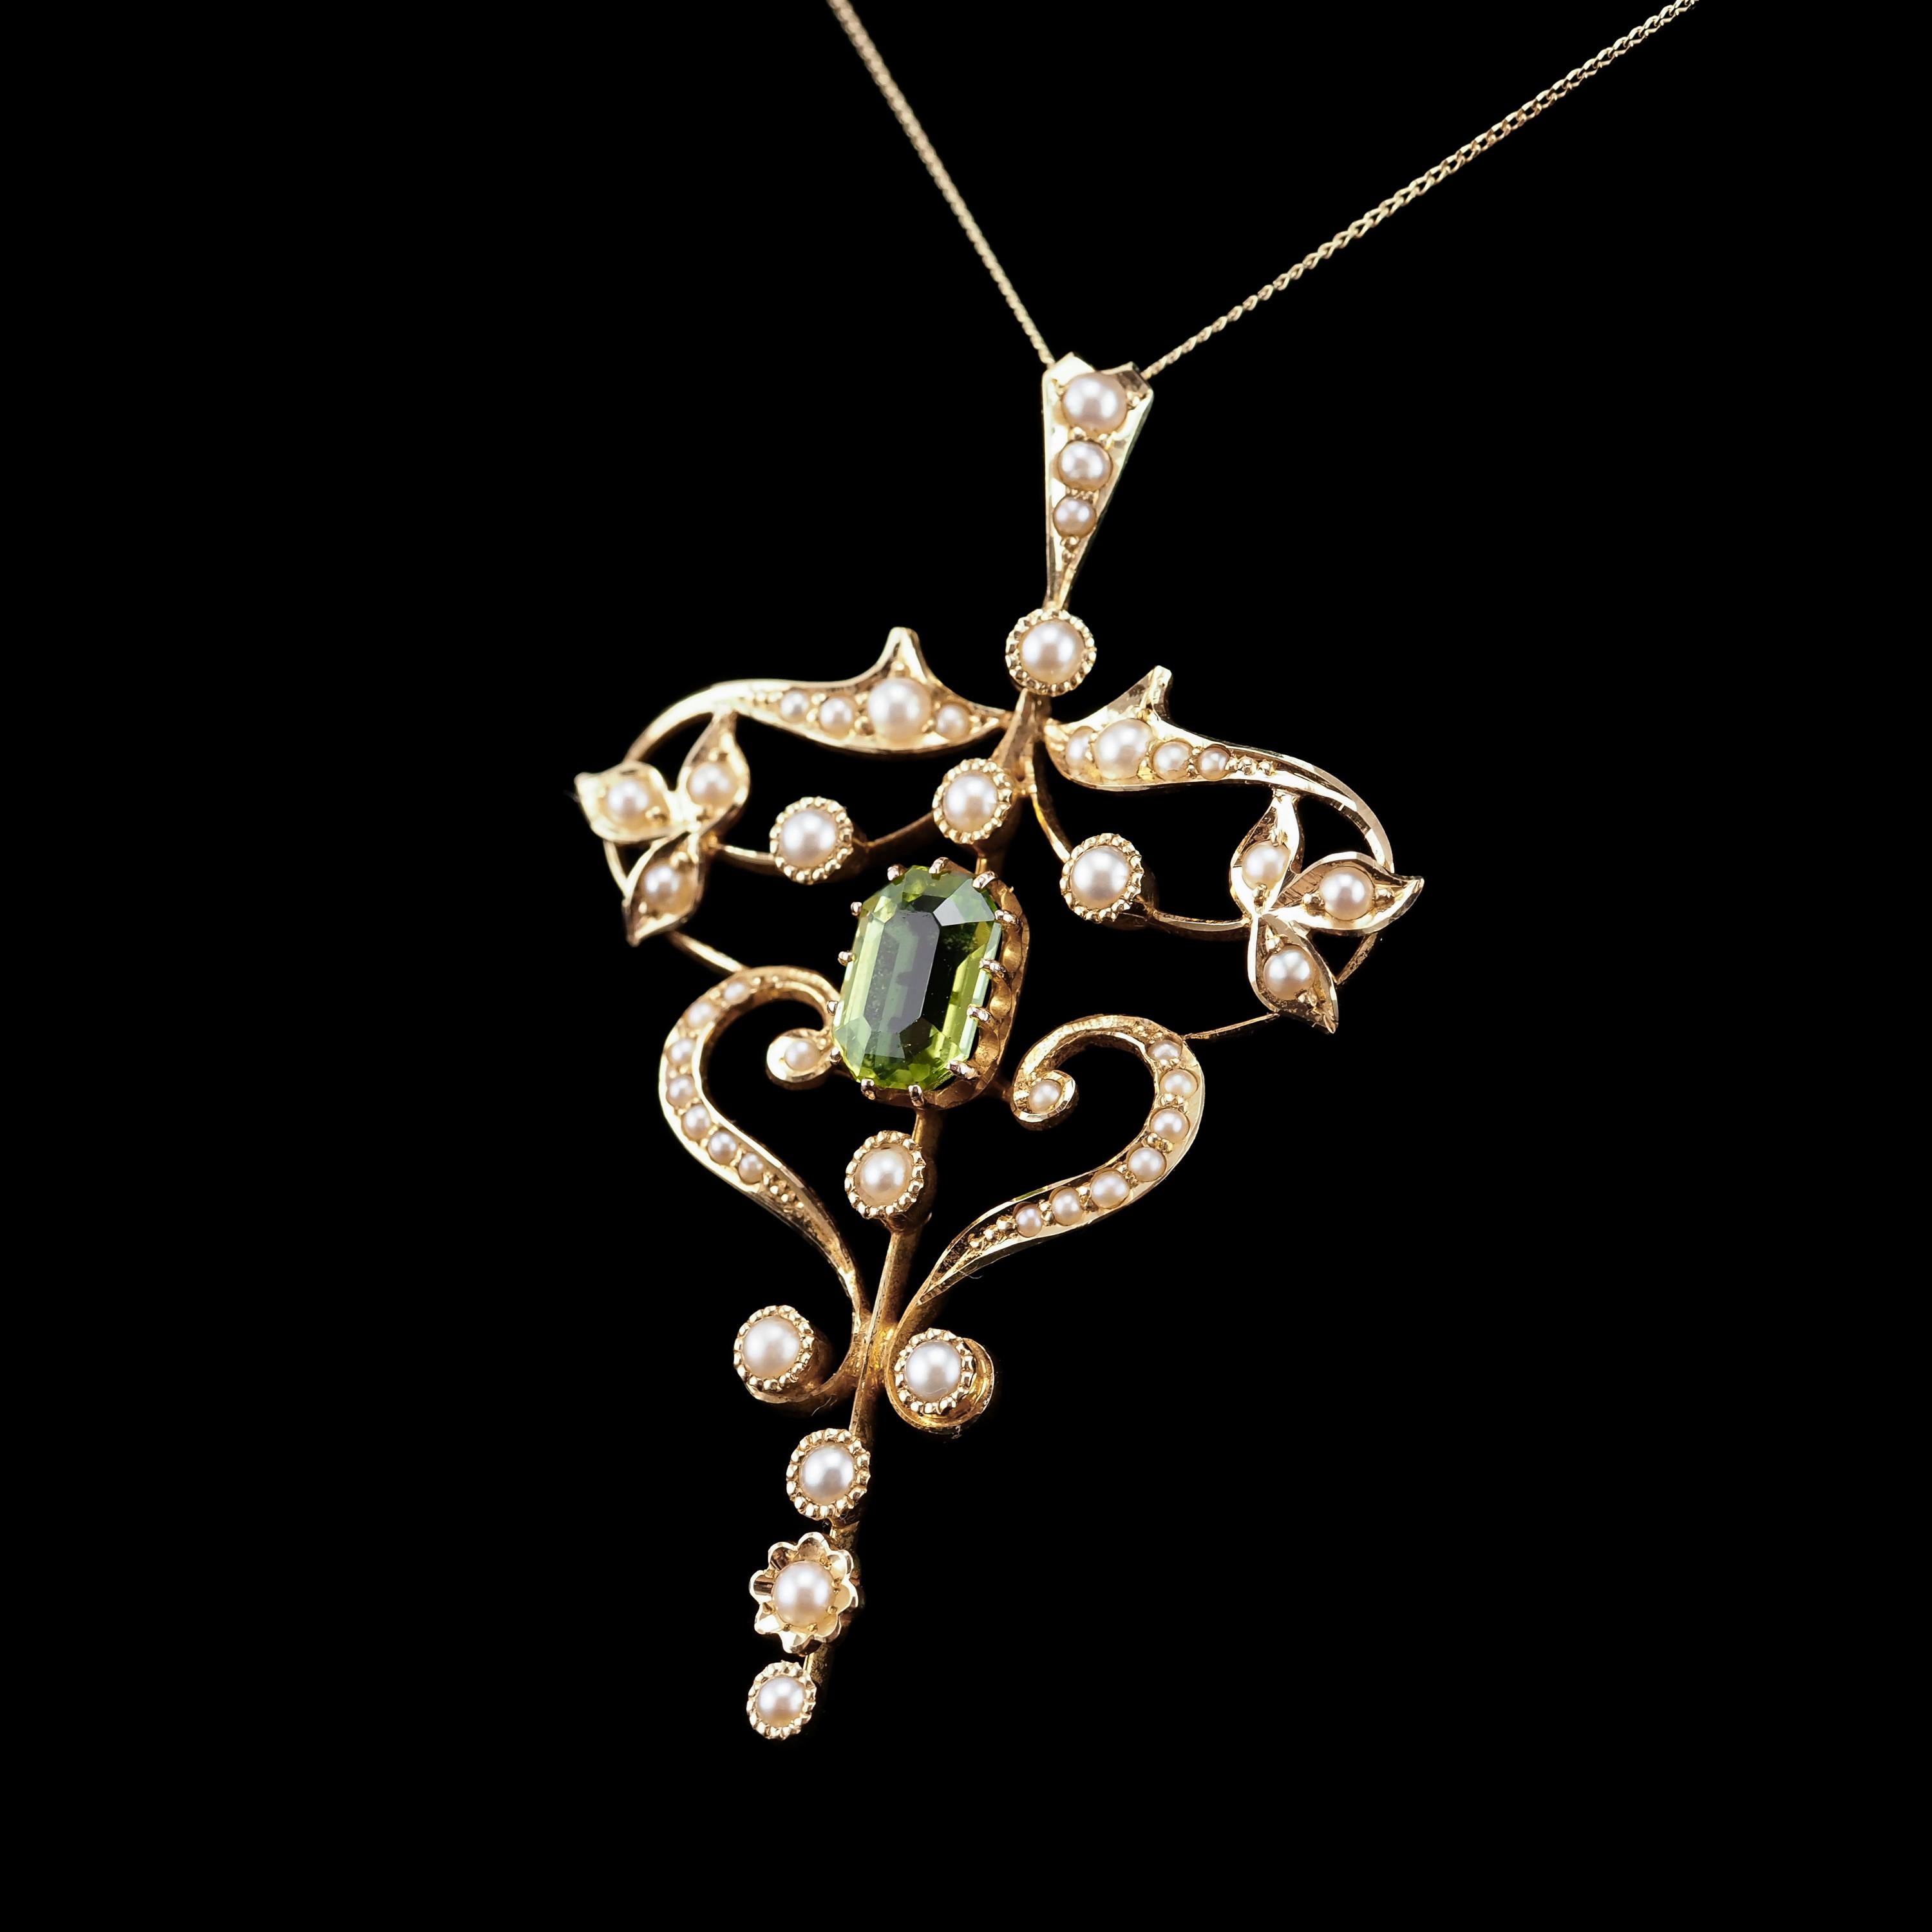 Emerald Cut Antique Edwardian 15K Gold Peridot & Pearl Necklace/Pendant - c.1910